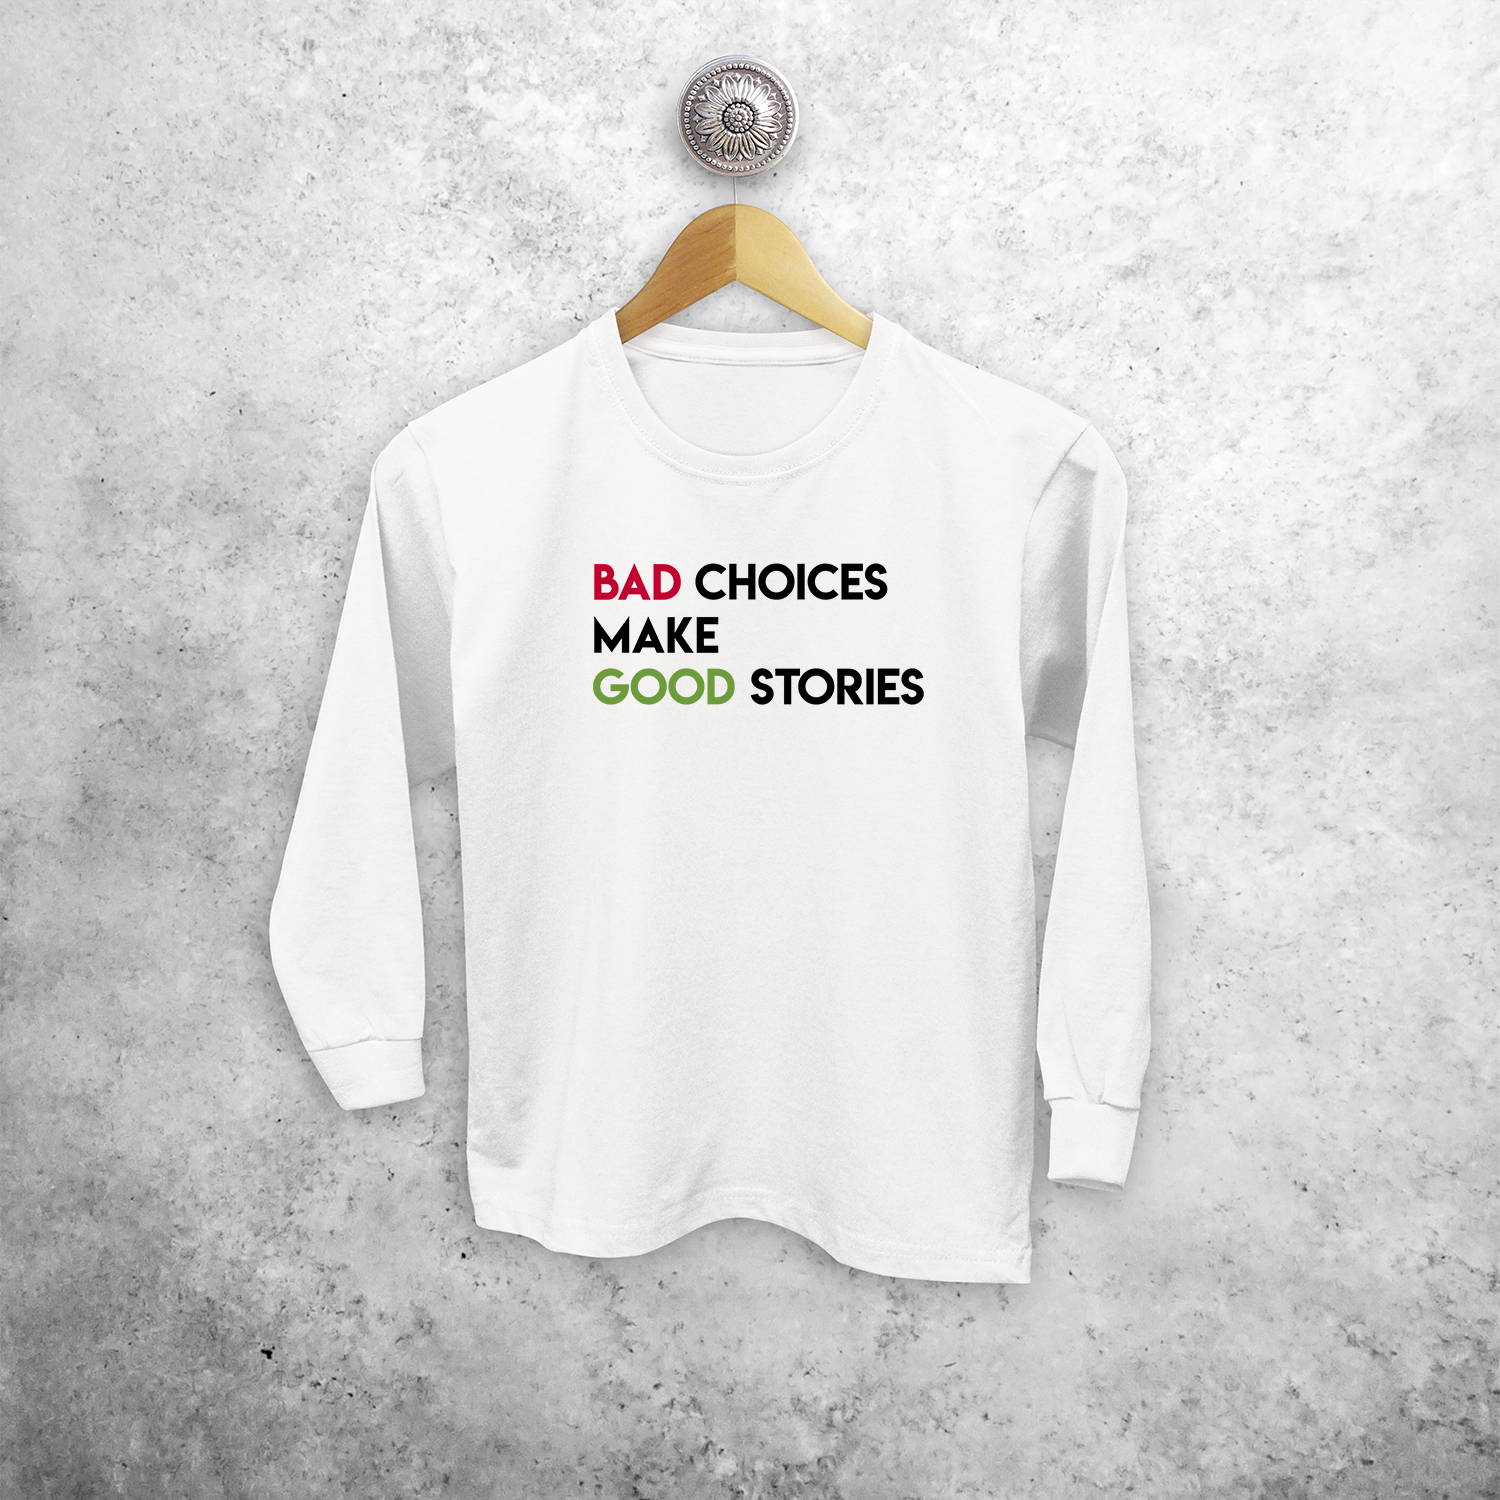 'Bad choices make good stories' kids longsleeve shirt